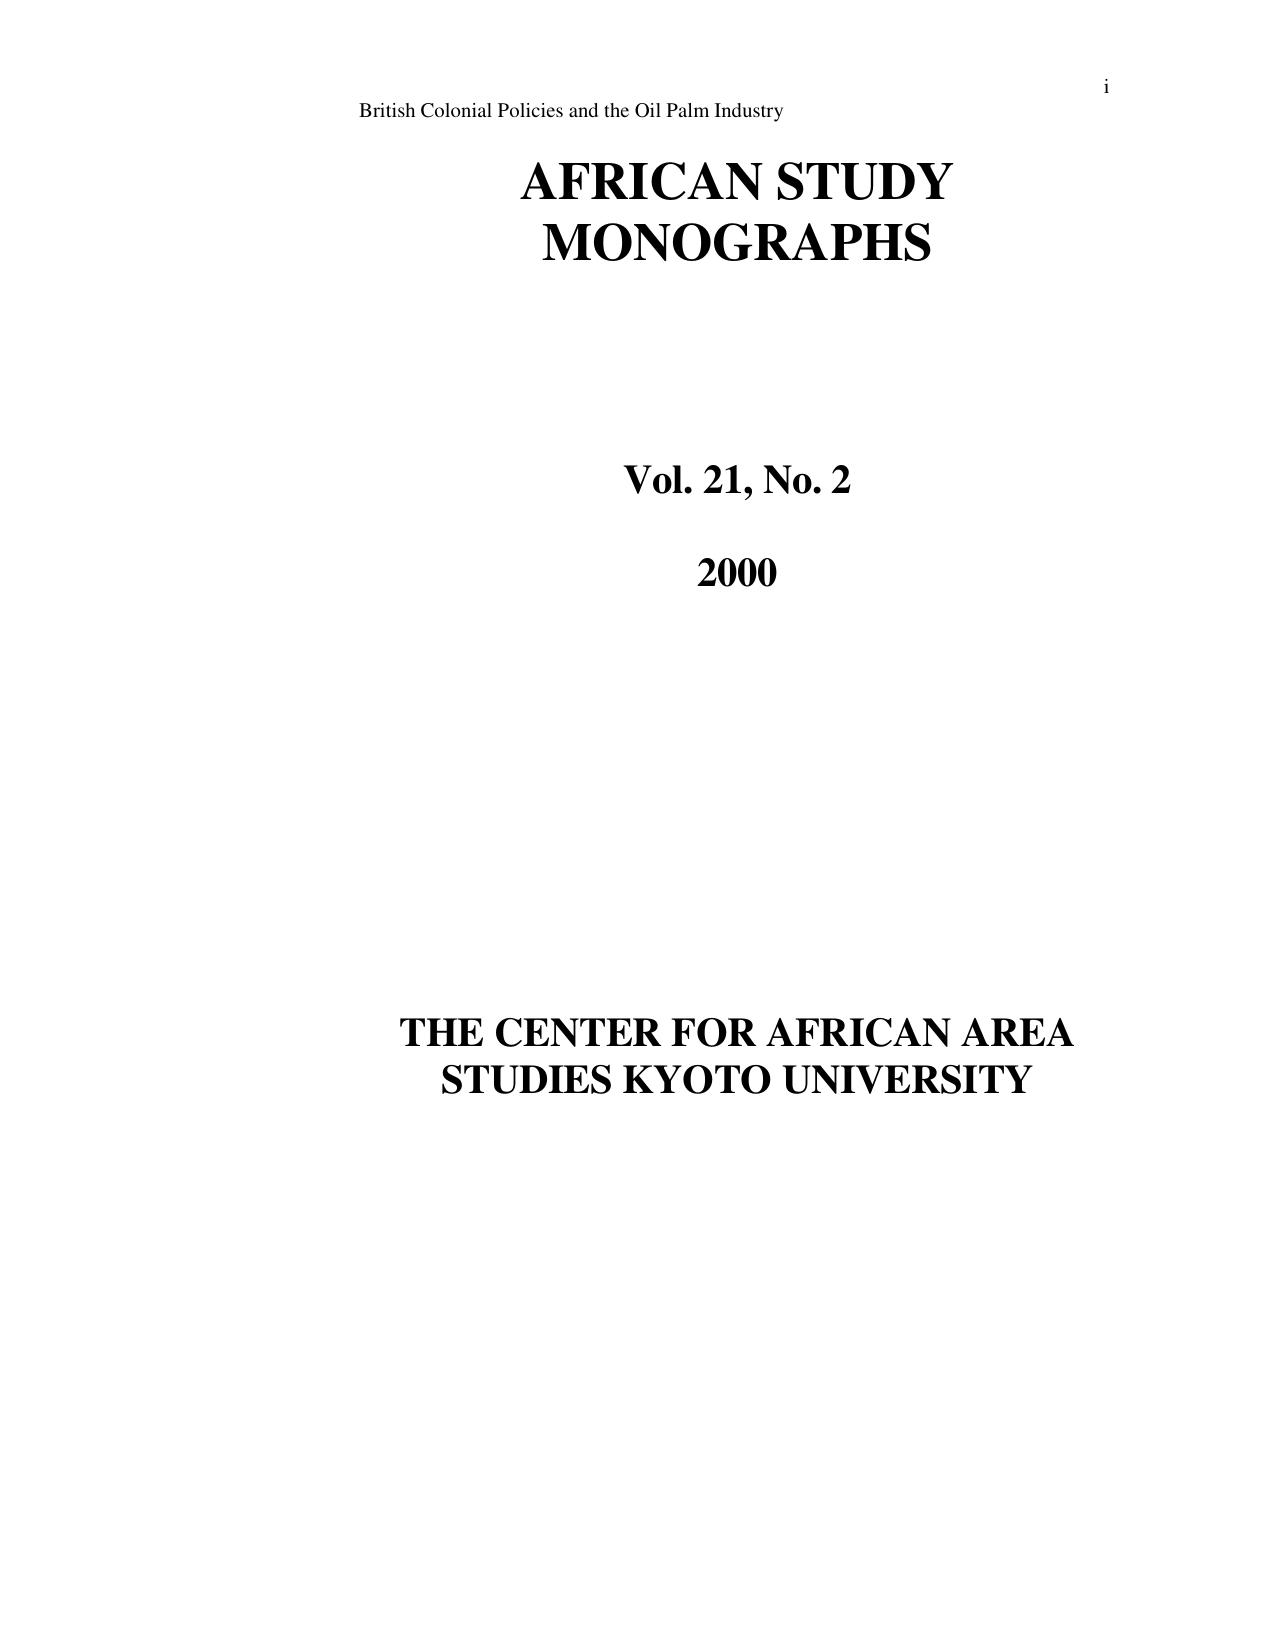 AFRICAN STUDY MONOGRAPHS